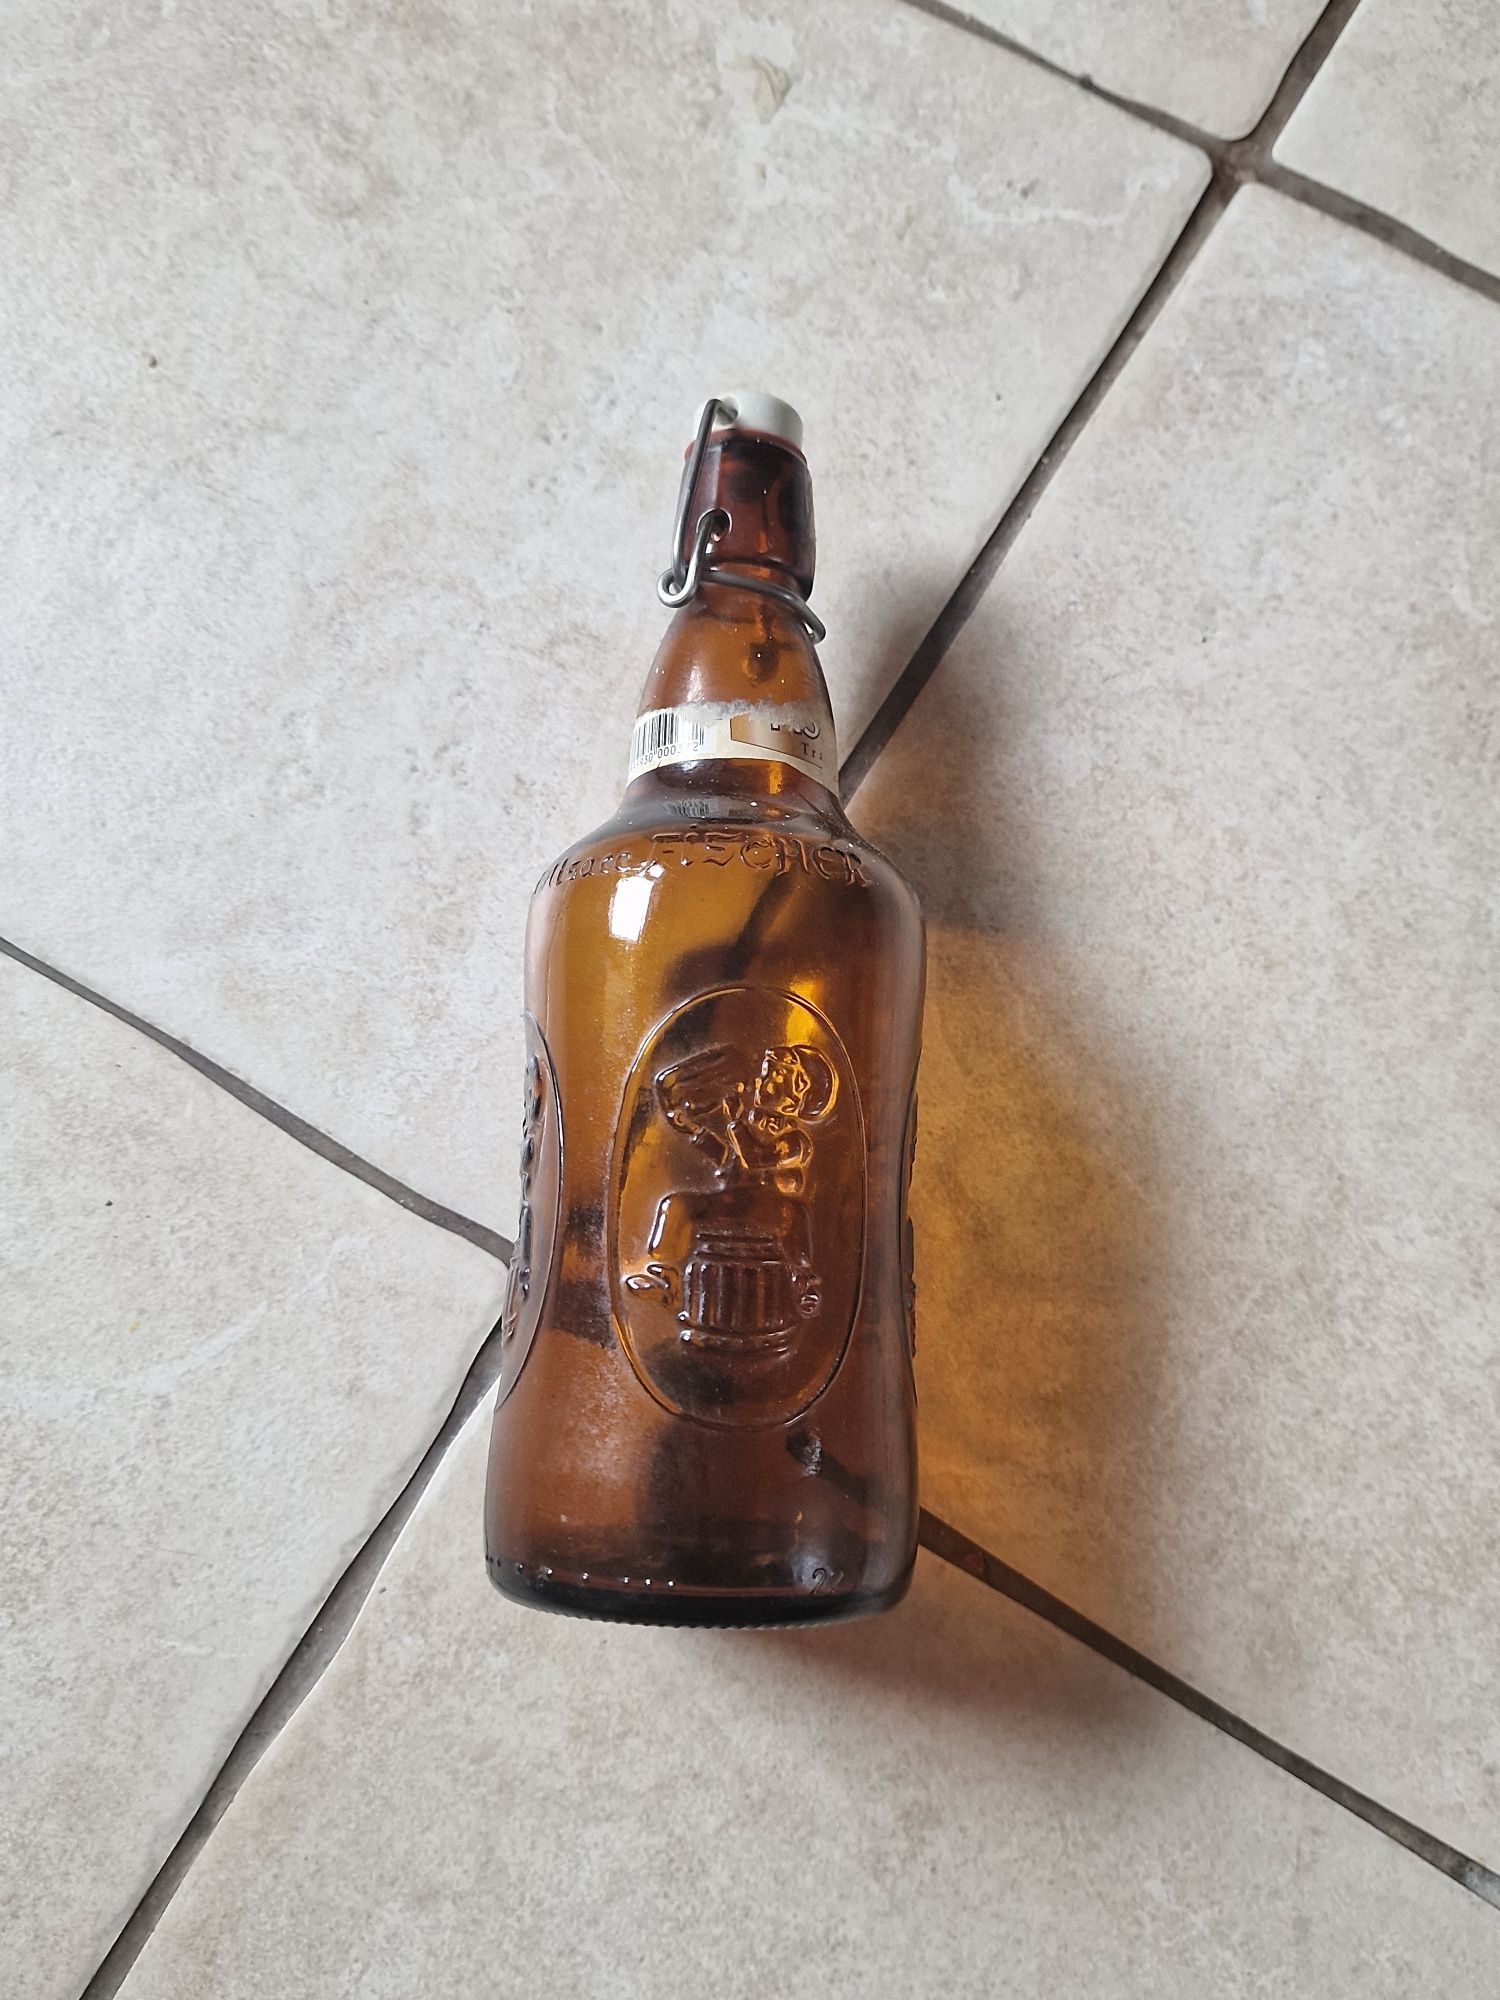 Butelka vintage FischerBieres cena 15zl